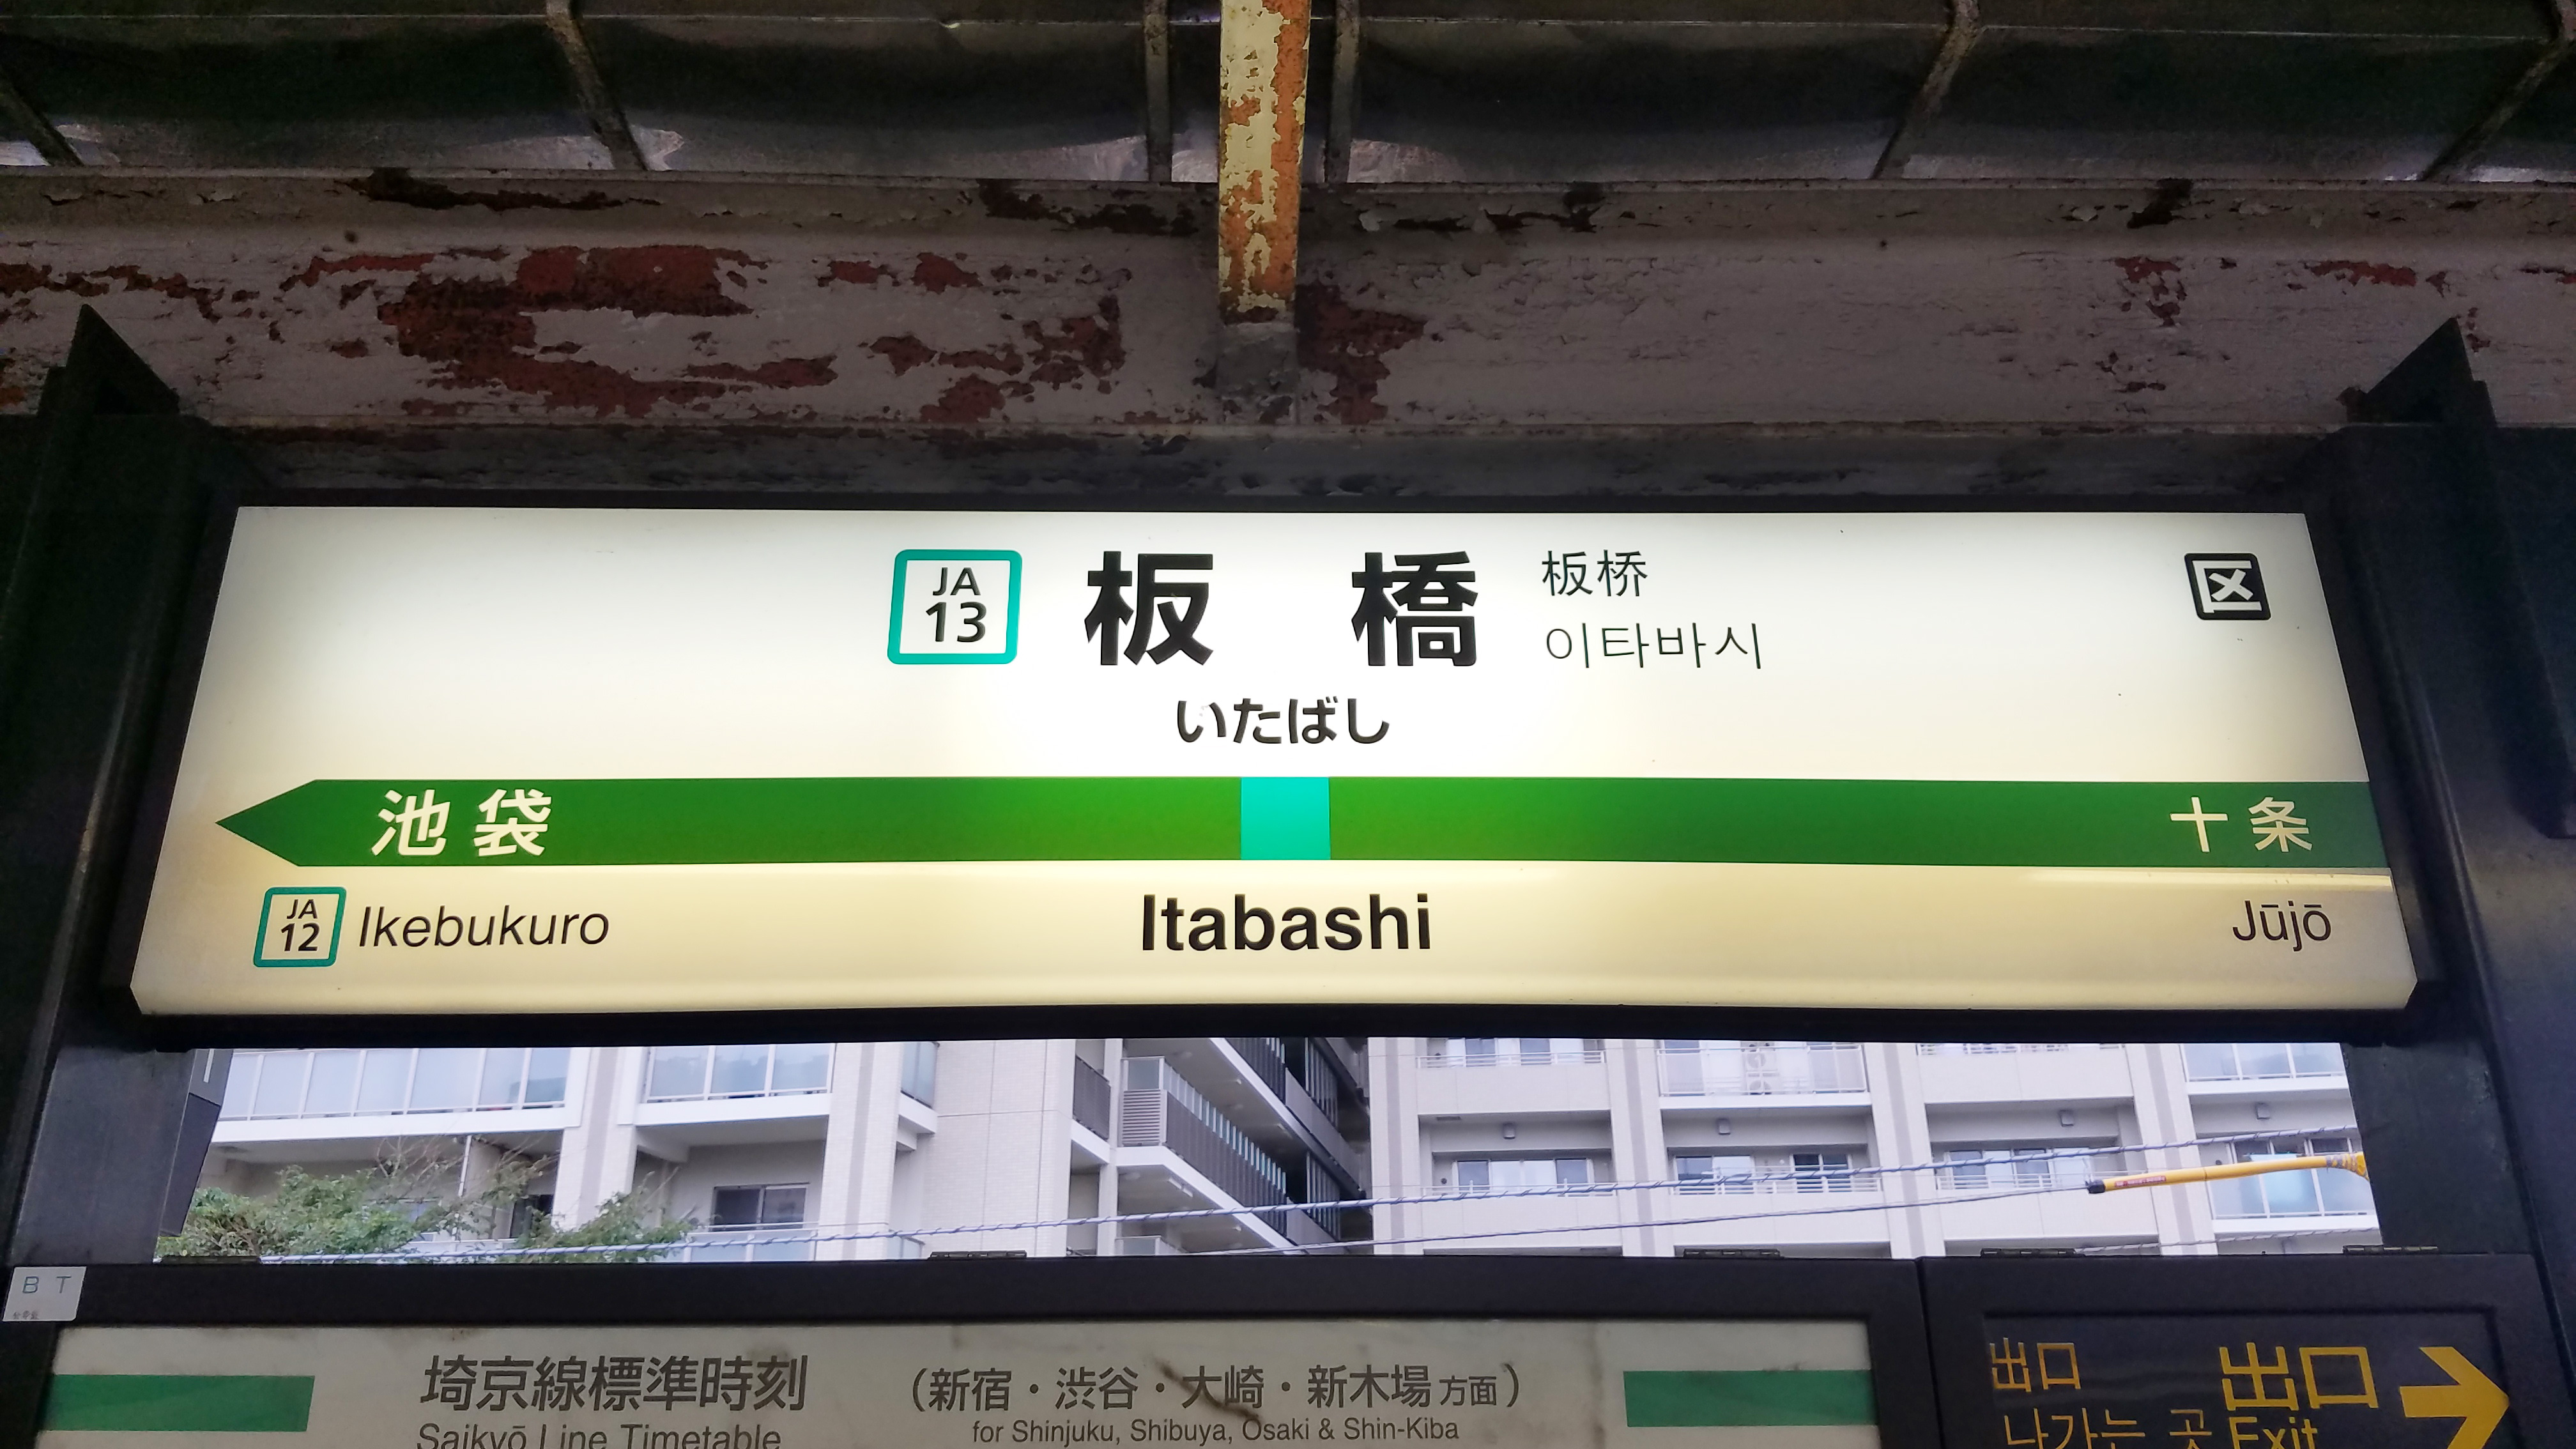 File Jreast Saikyo Line Ja13 Itabashi Station Sign Jpg Wikimedia Commons